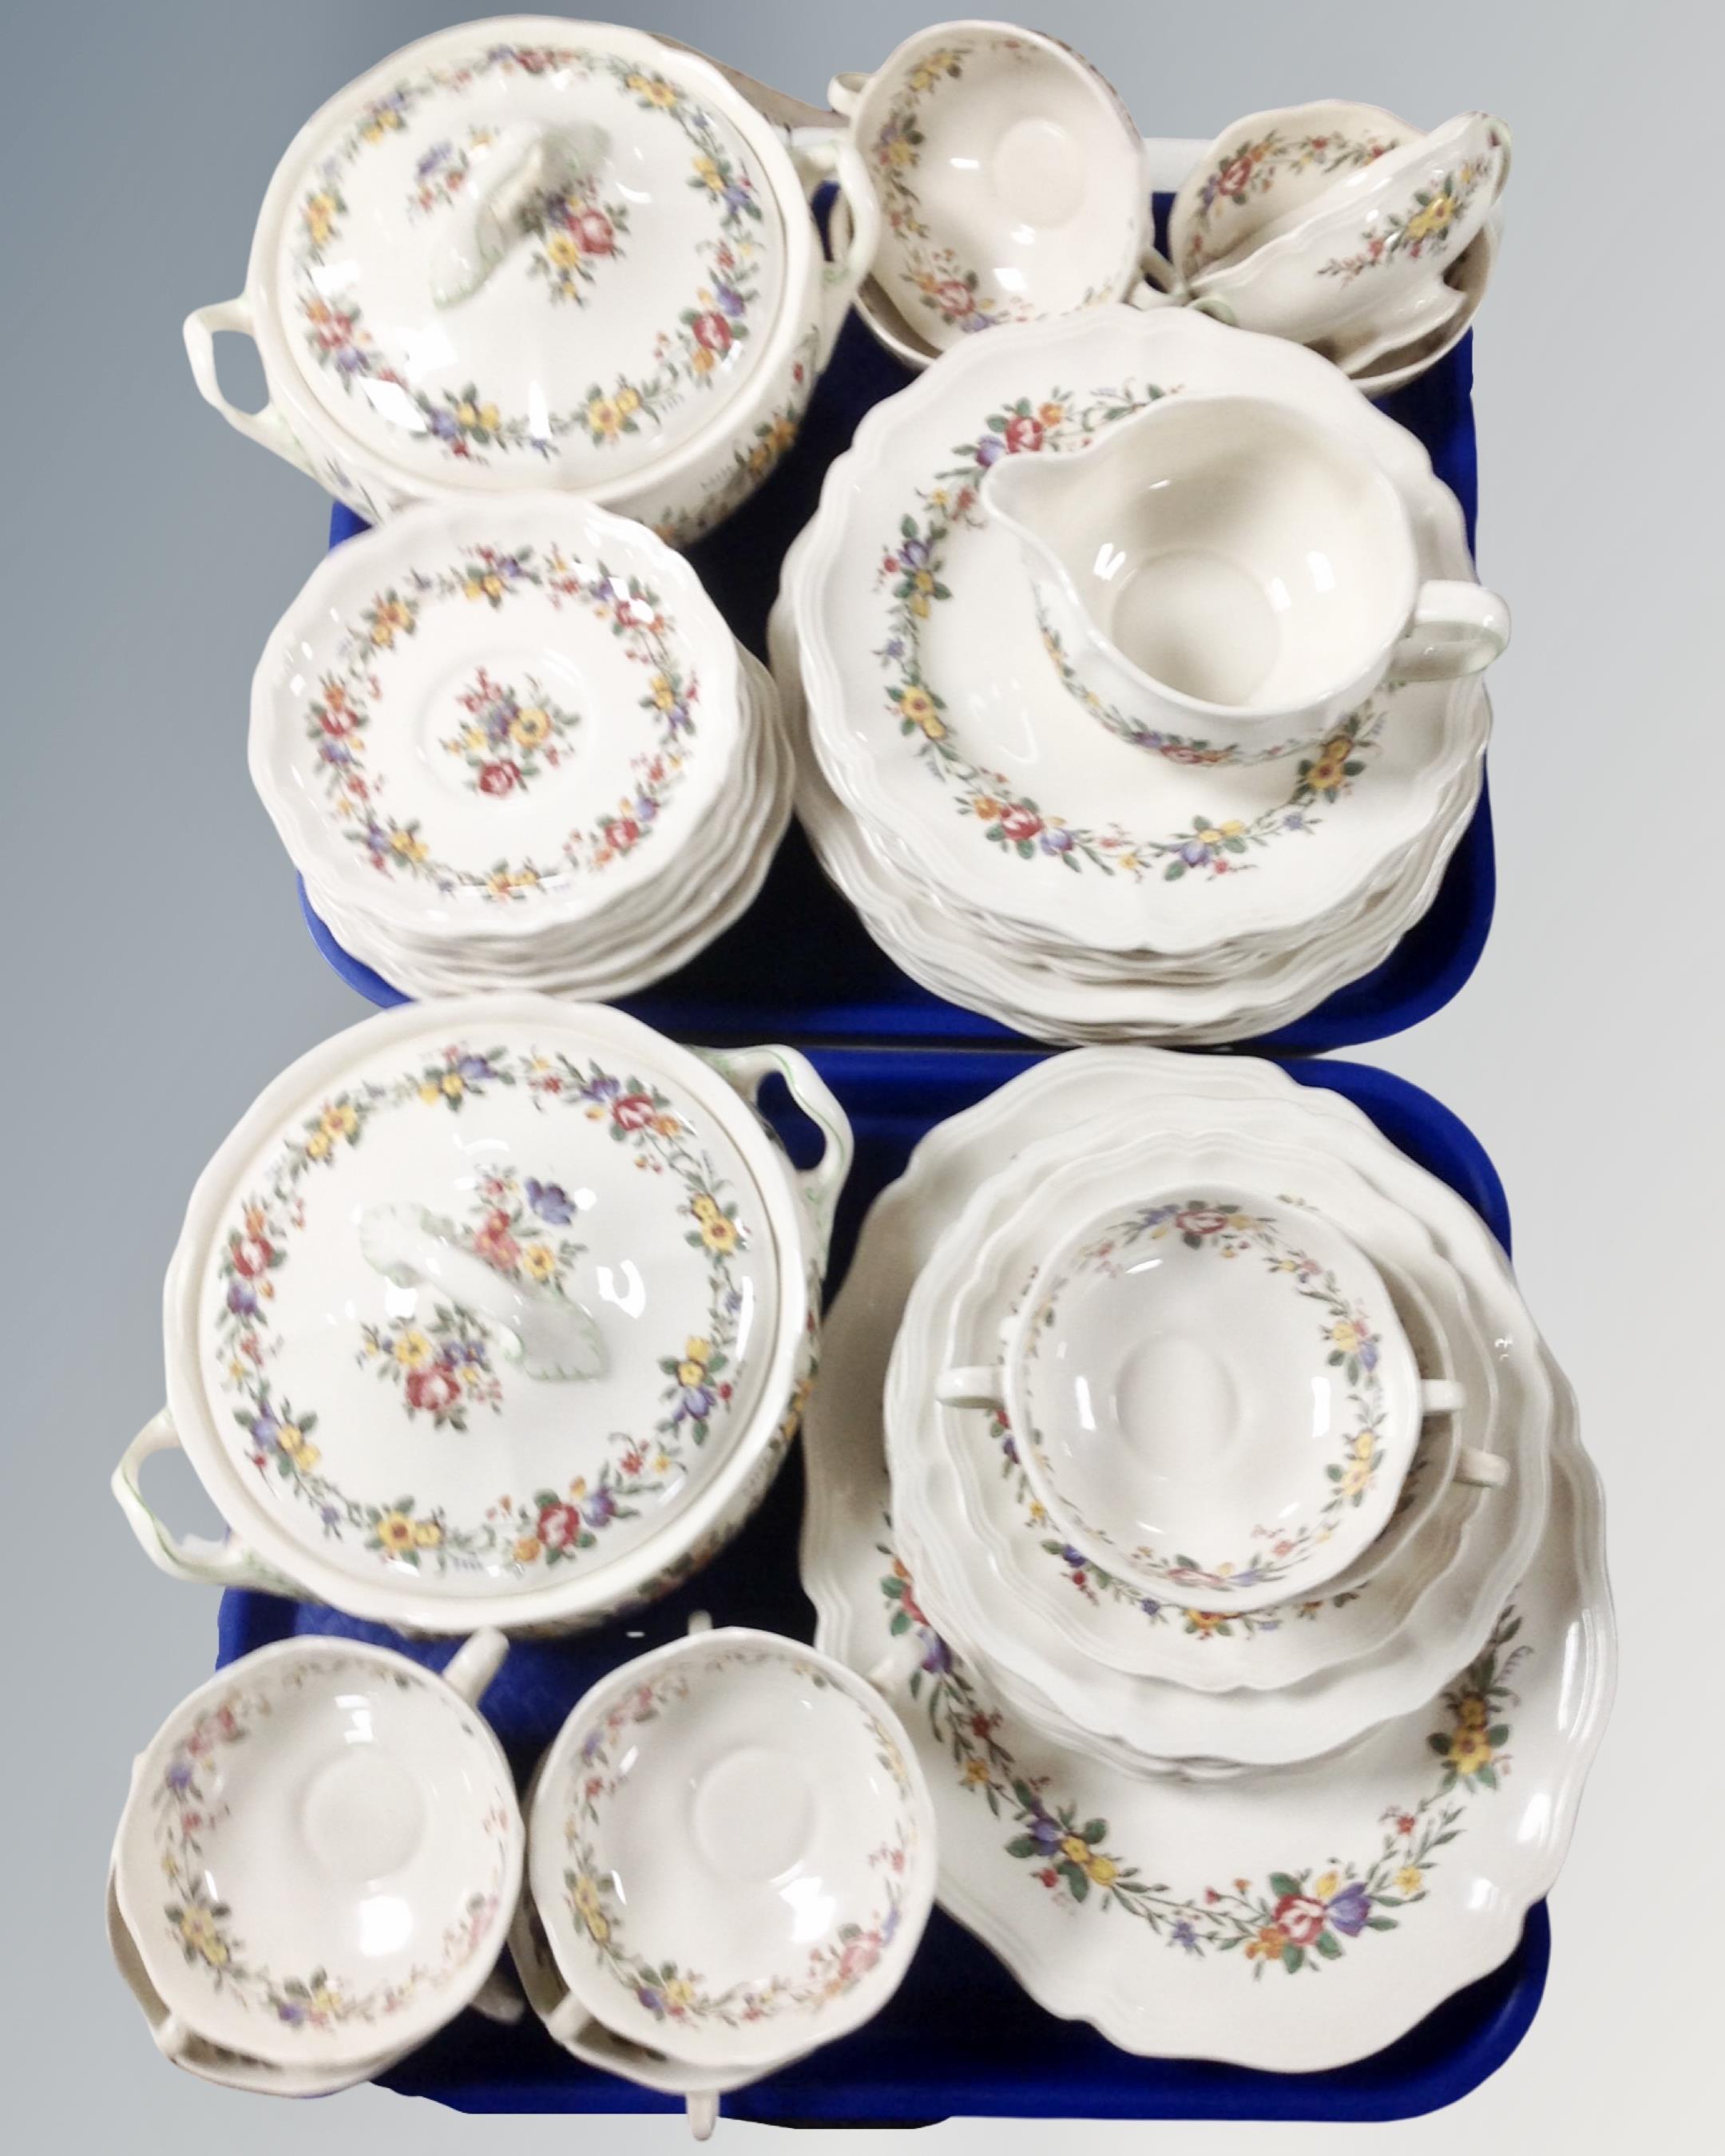 Two trays containing Royal Doulton Leighton tea and dinnerware.